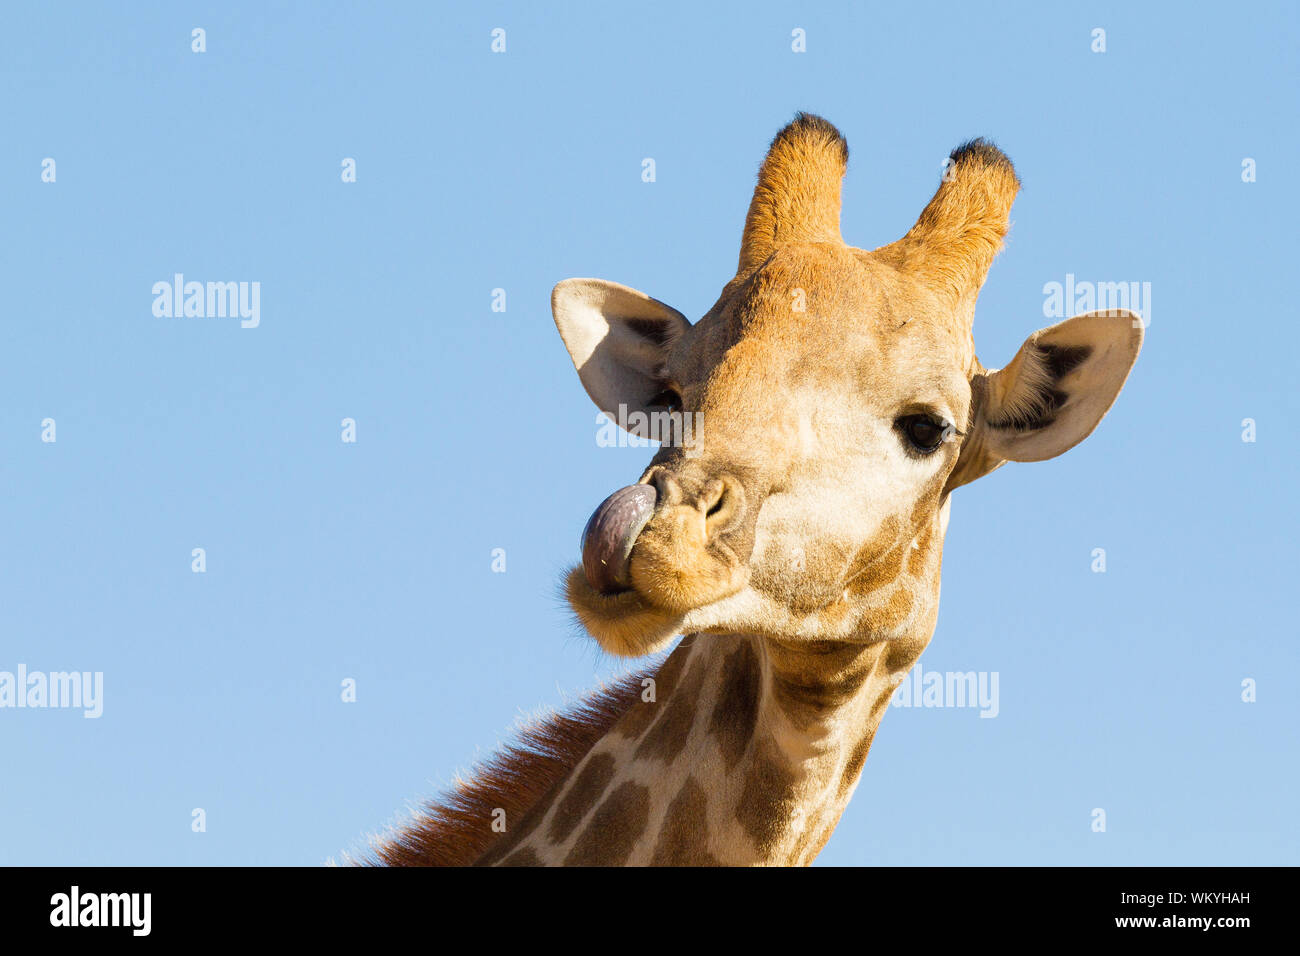 A giraffe licks its nose in Kgalagadi Transfrontier Park, South Africa. Stock Photo